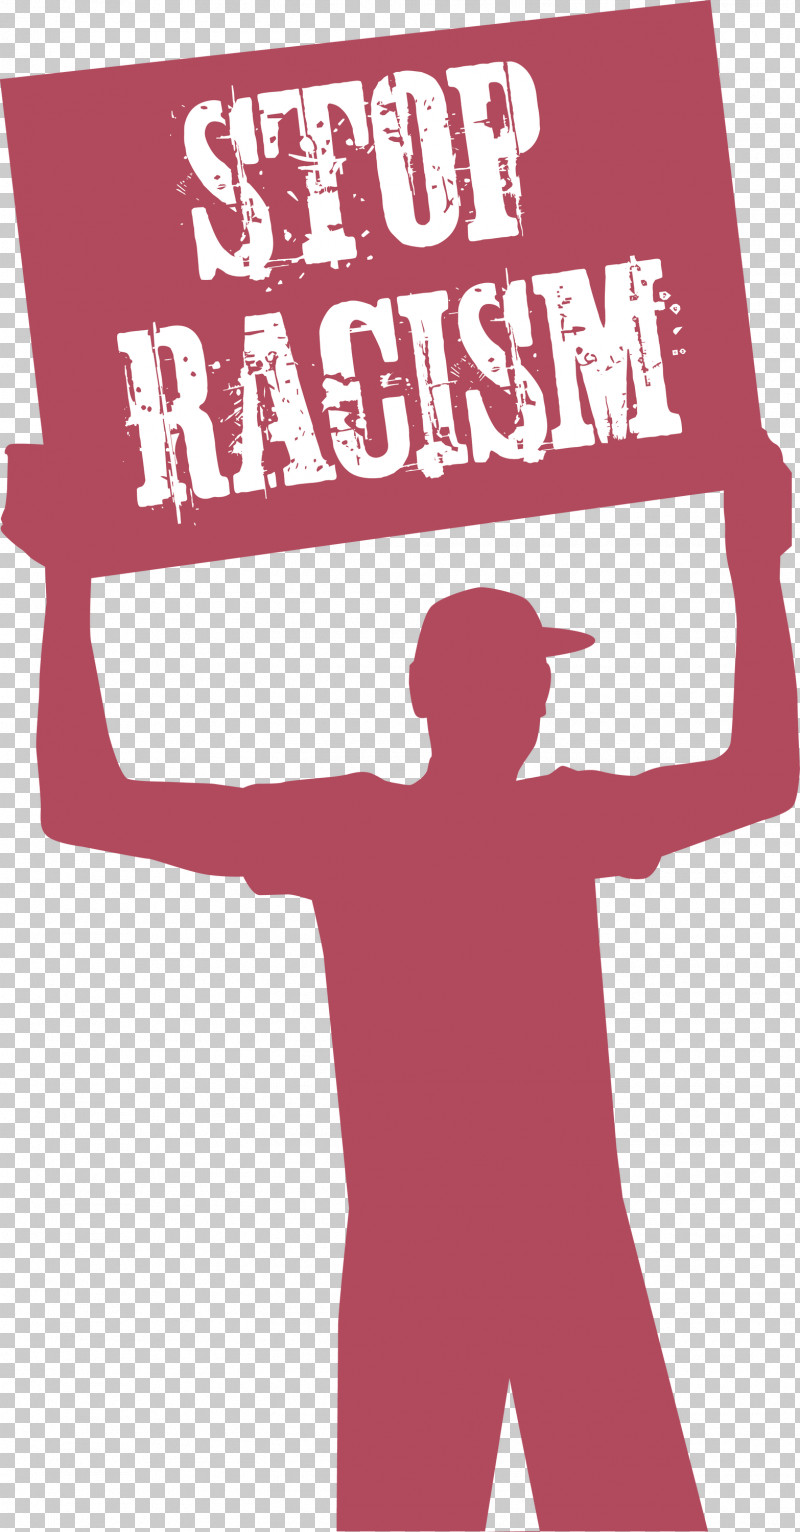 STOP RACISM PNG, Clipart, Area, Behavior, Human, Human Biology, Human Skeleton Free PNG Download